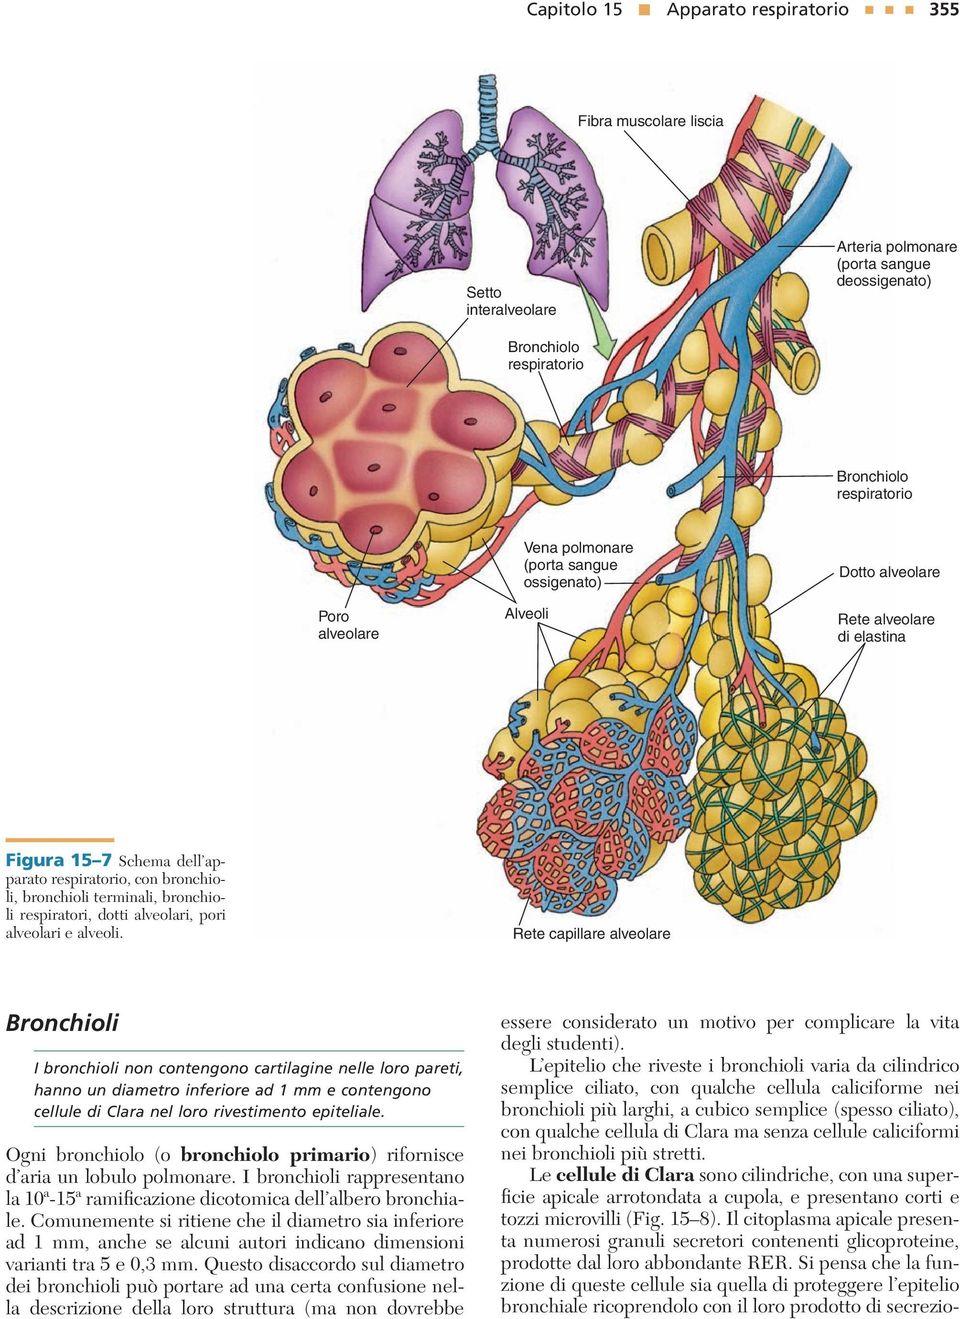 dotti alveolari, pori alveolari e alveoli.